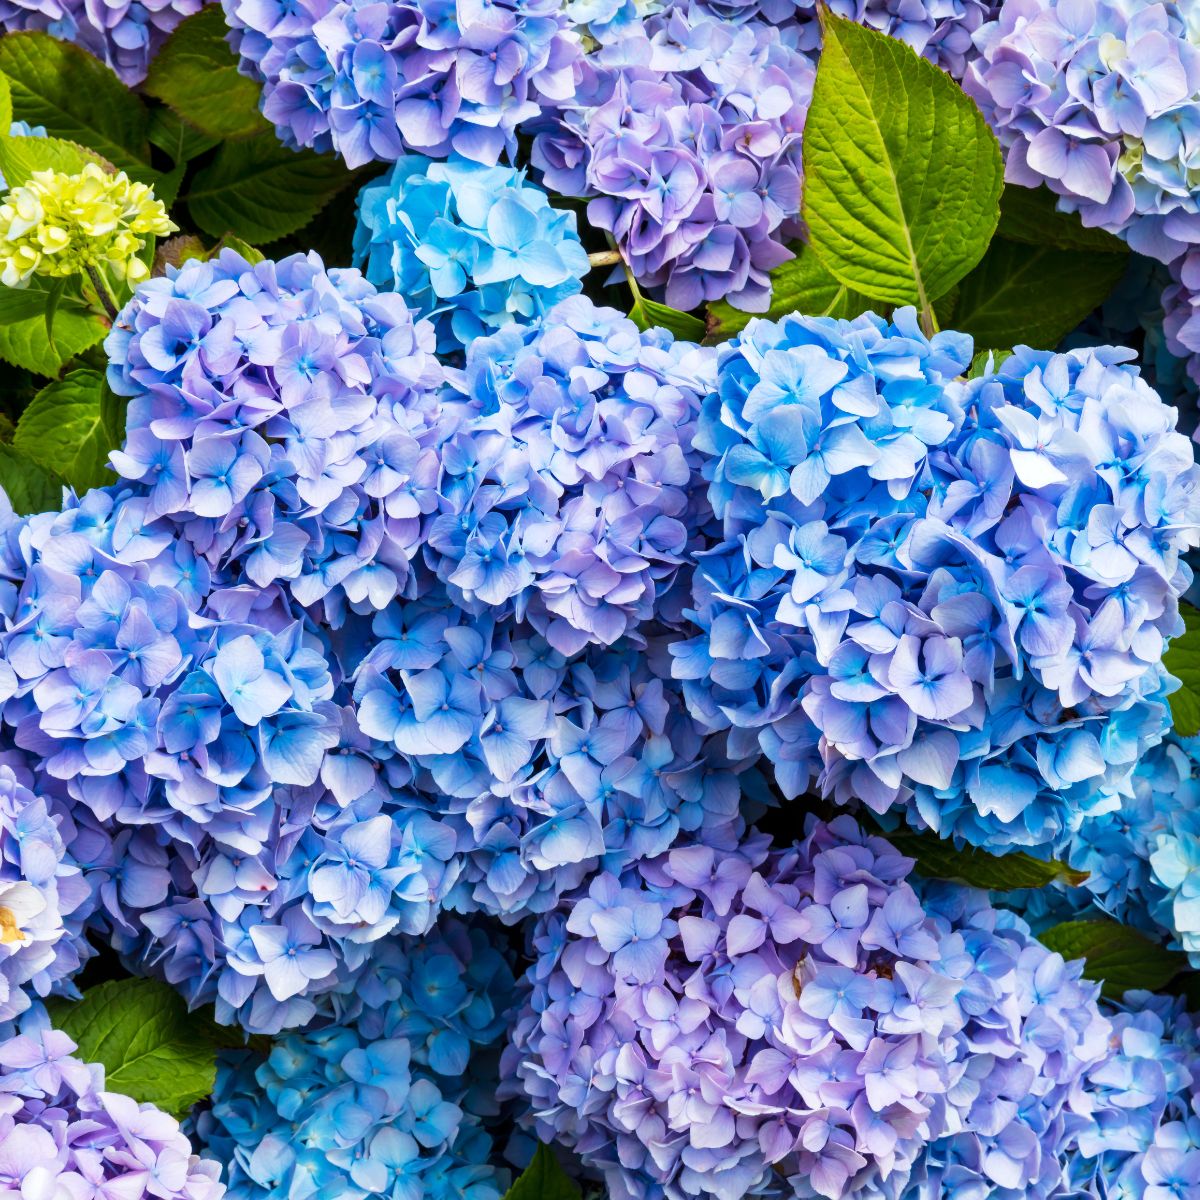 blue bigleaf hydrangea flowers.